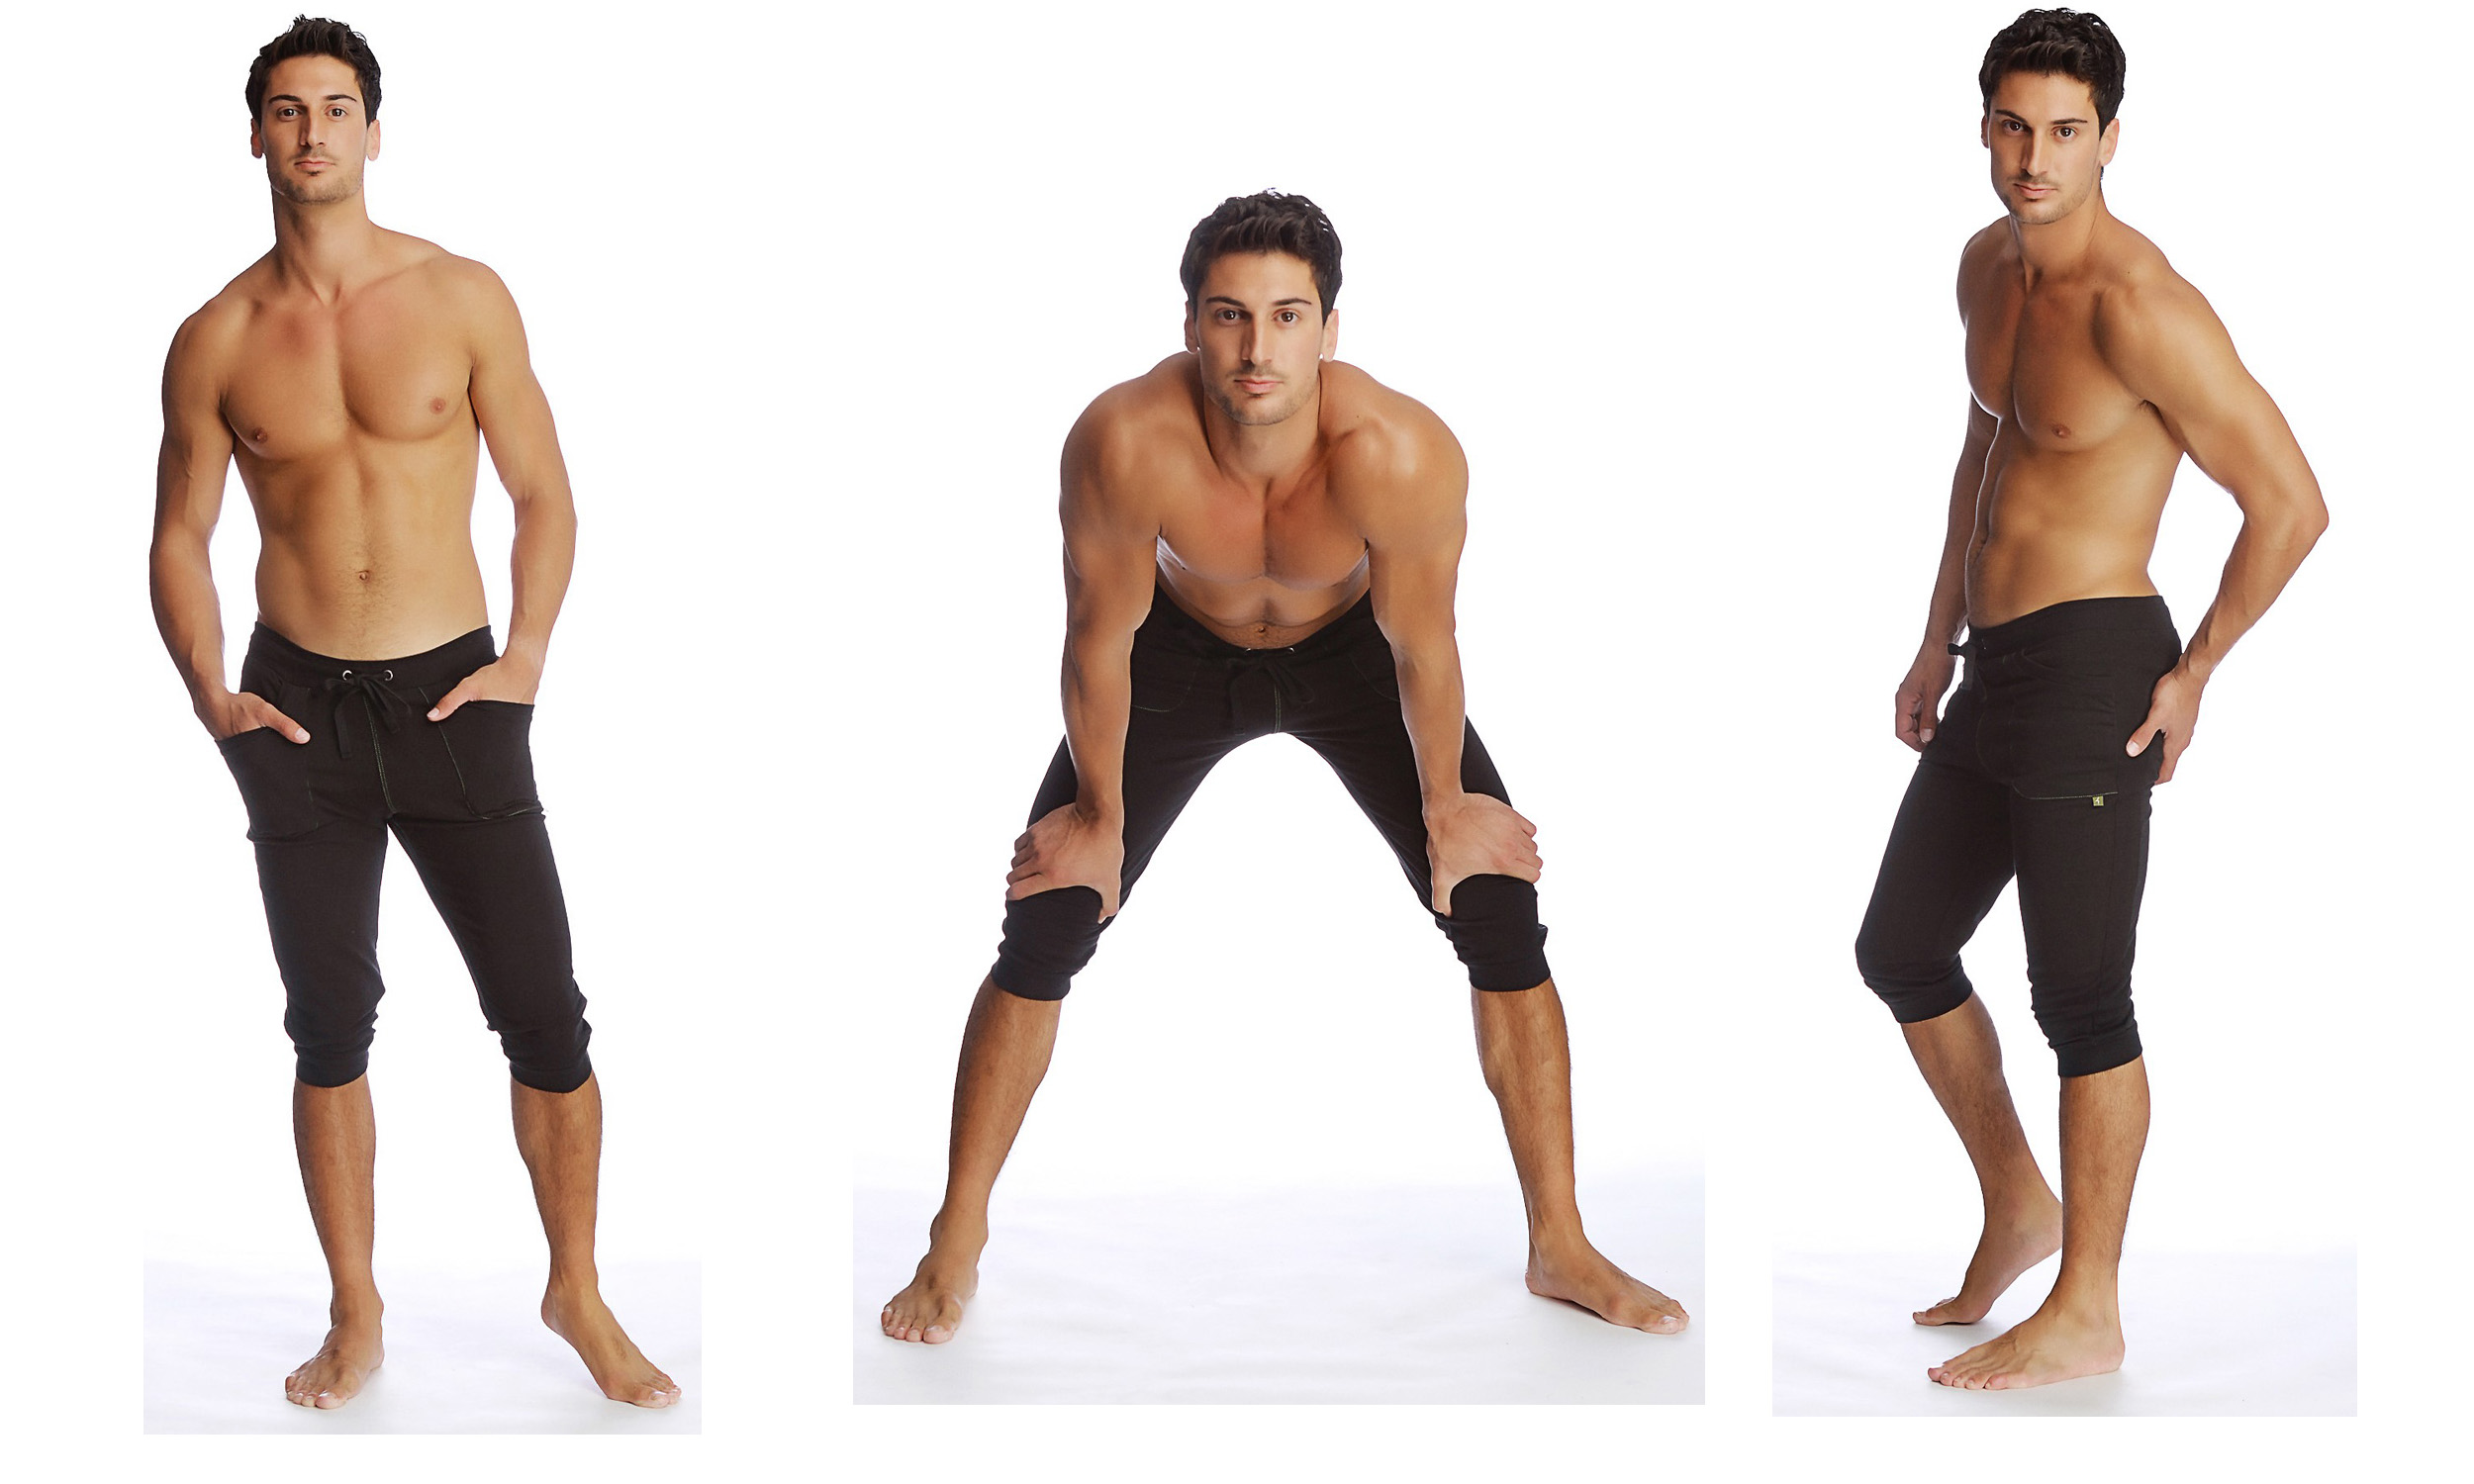 Men in yoga pants is HAPPENING